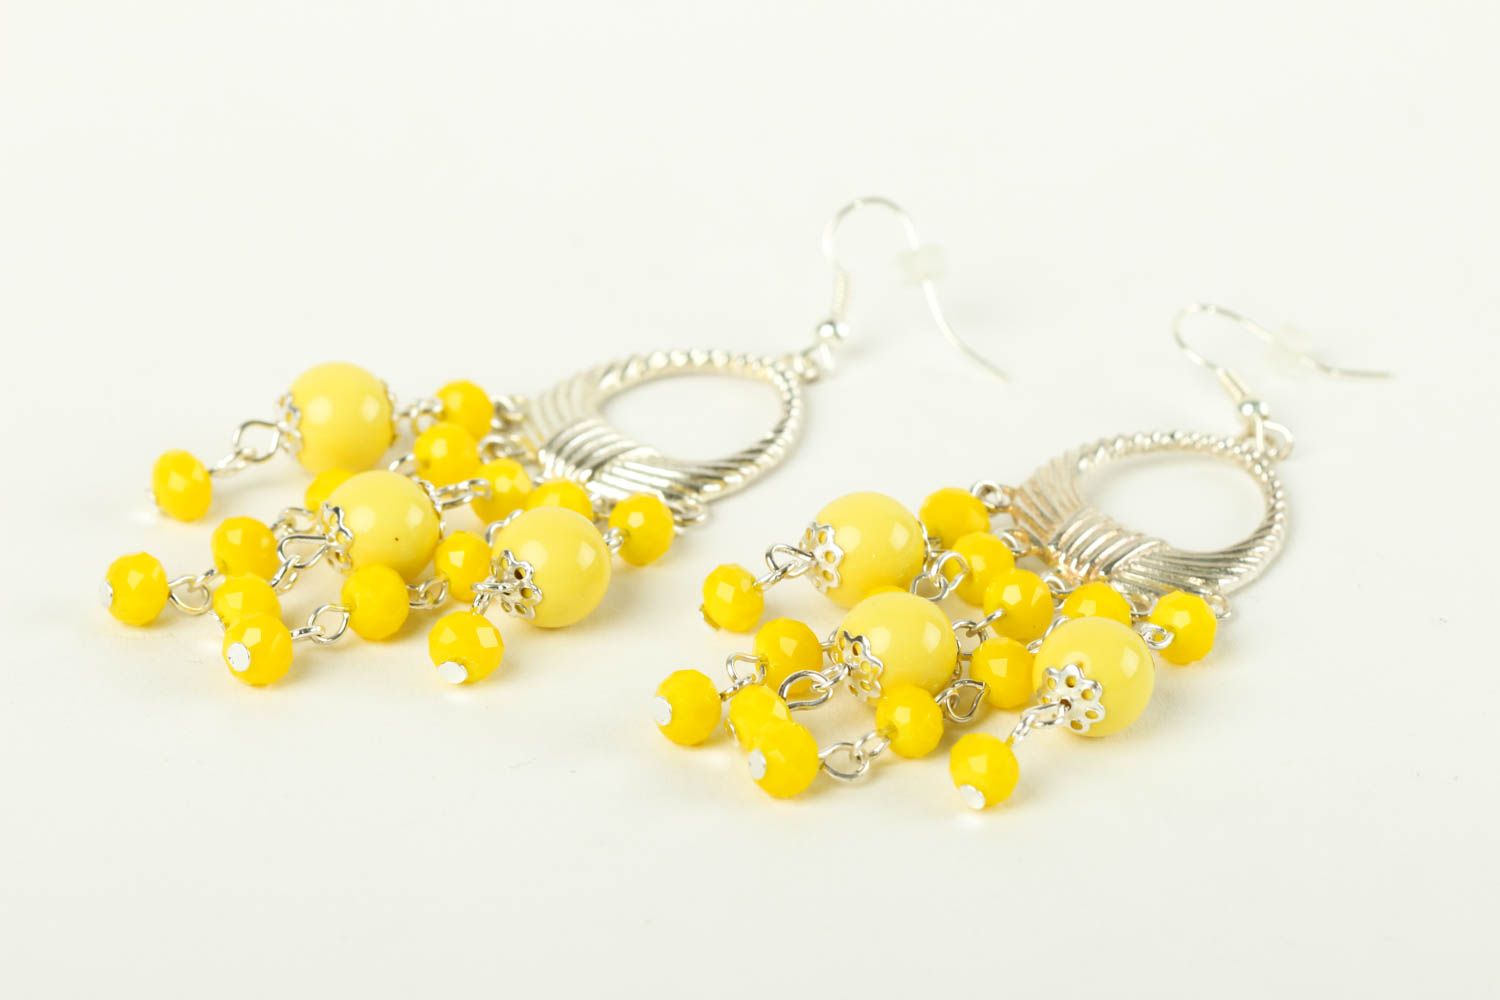 Beaded earrings designer earrings with beads handmade jewelry stylish accessory photo 3